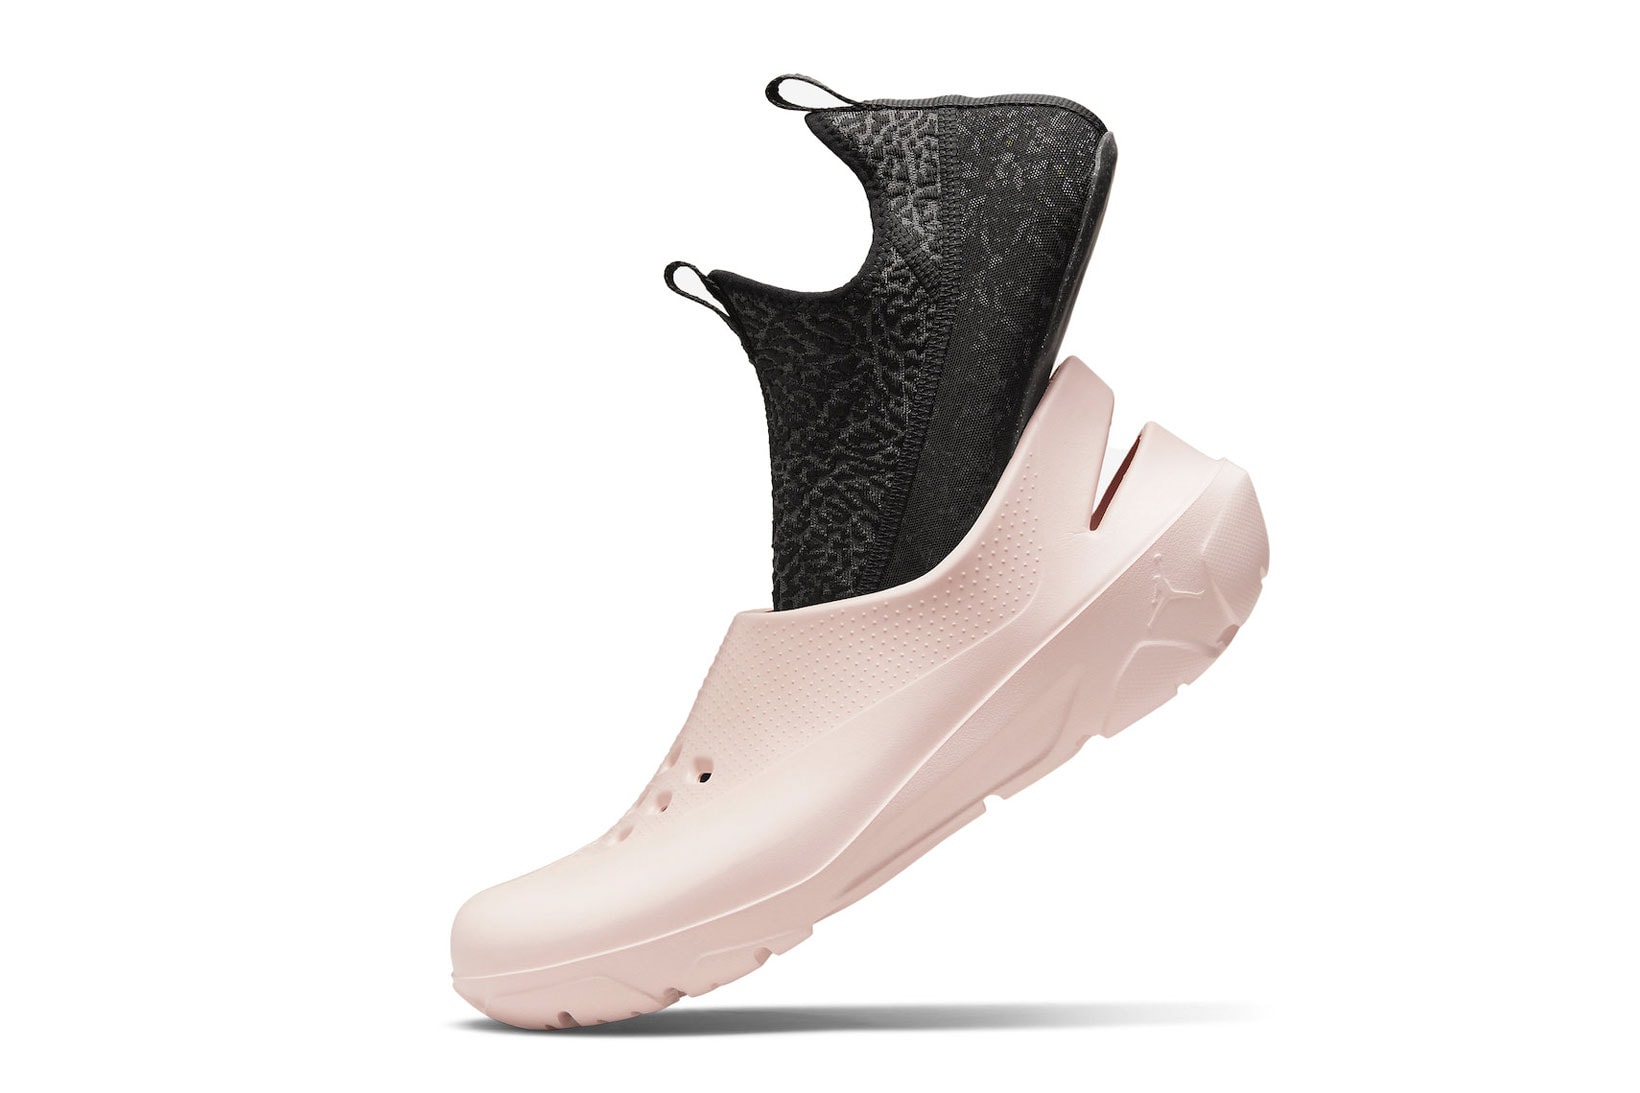 Jordan Brand System.23 Clogs Slip-On Pastel Pink Colorway Release Price Images Info